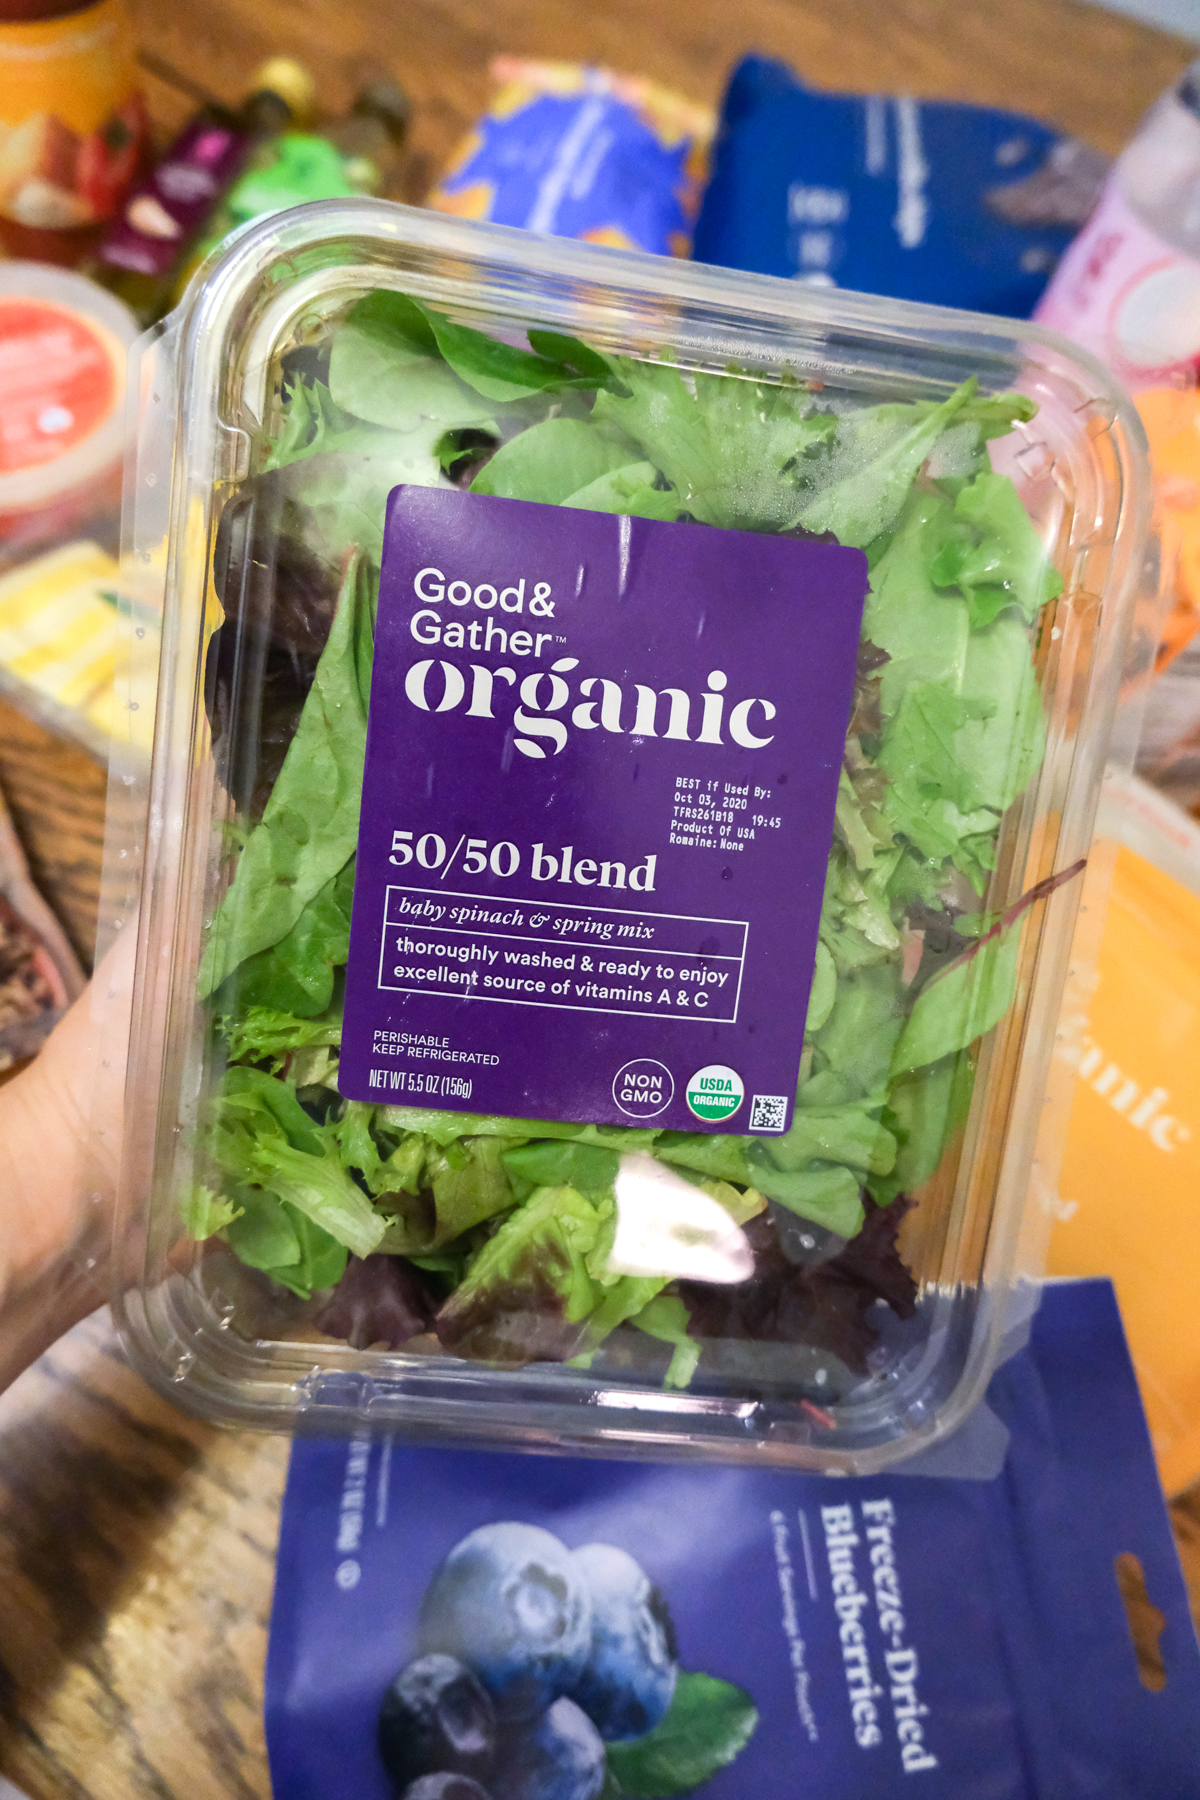 organic 50/50 blend salad greens Good & Gather from Target